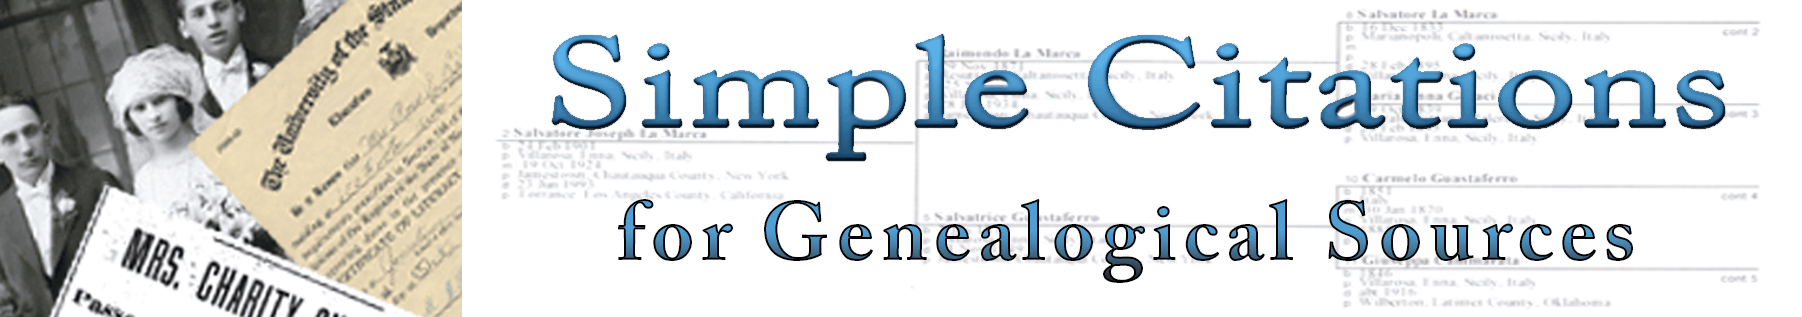 Simple Citations for Genealogical Sources